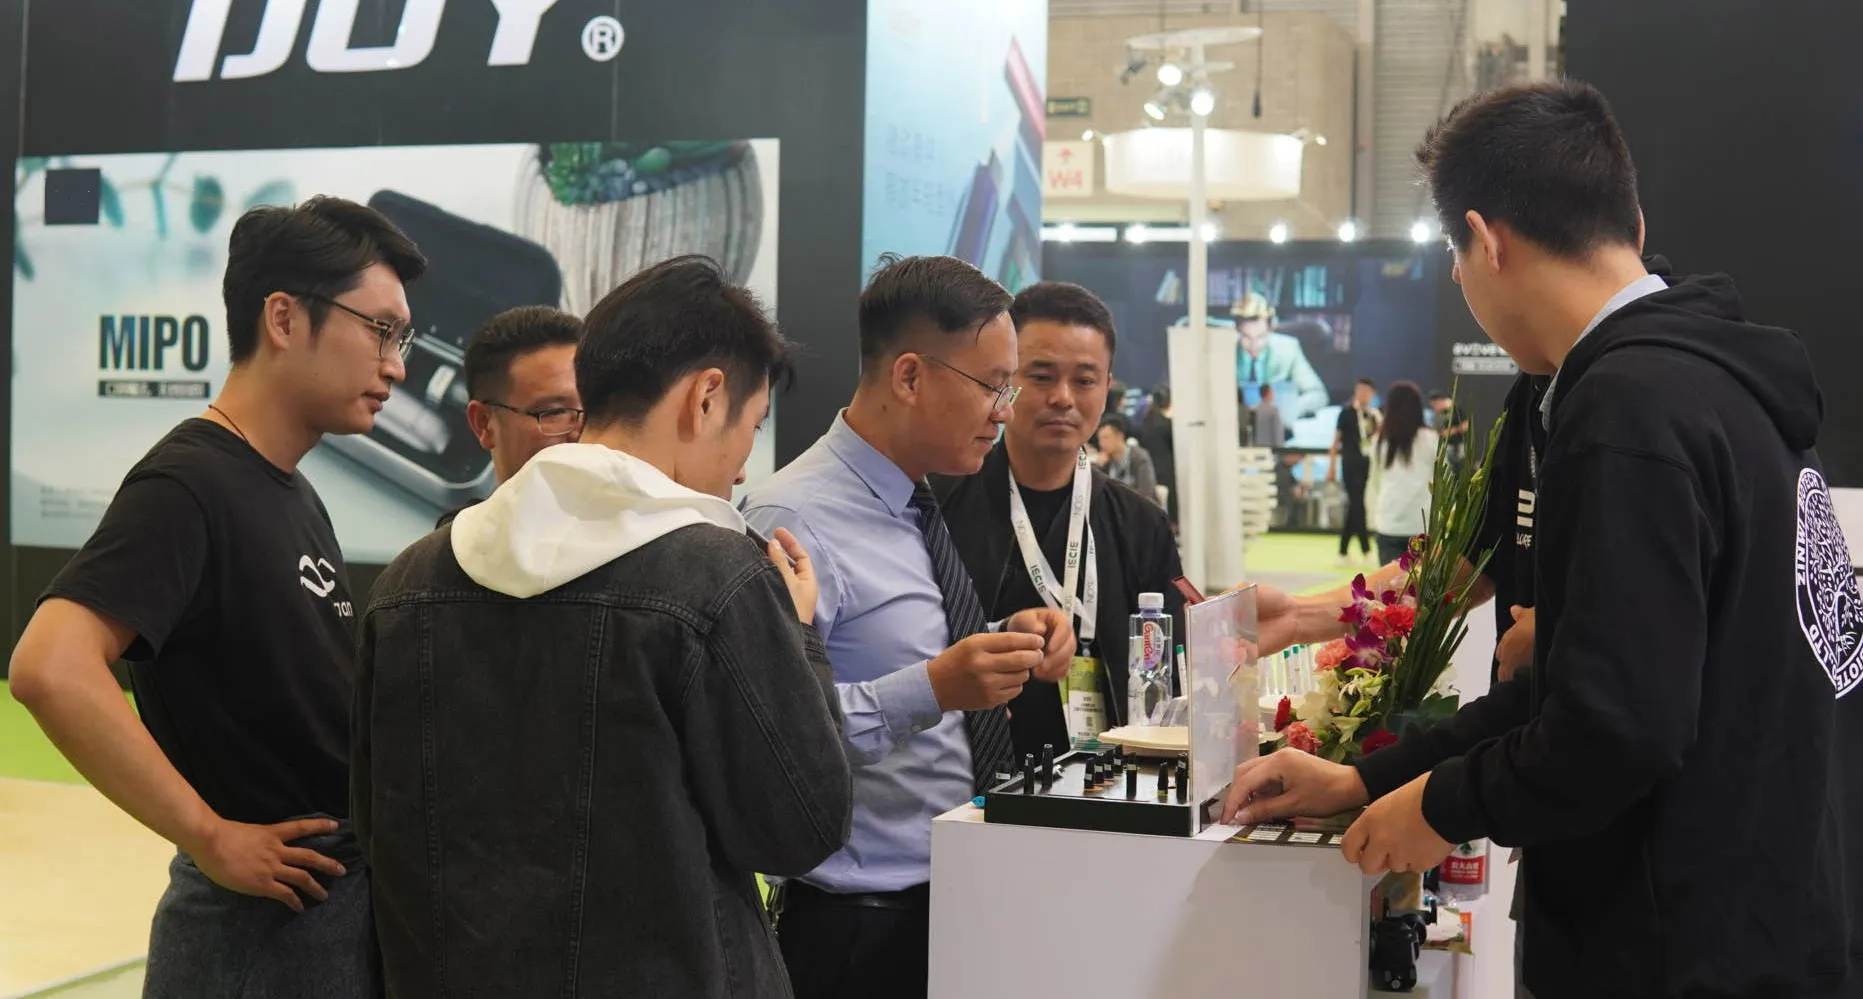 Customers praised the quality and taste of Zinwi's e-liquid